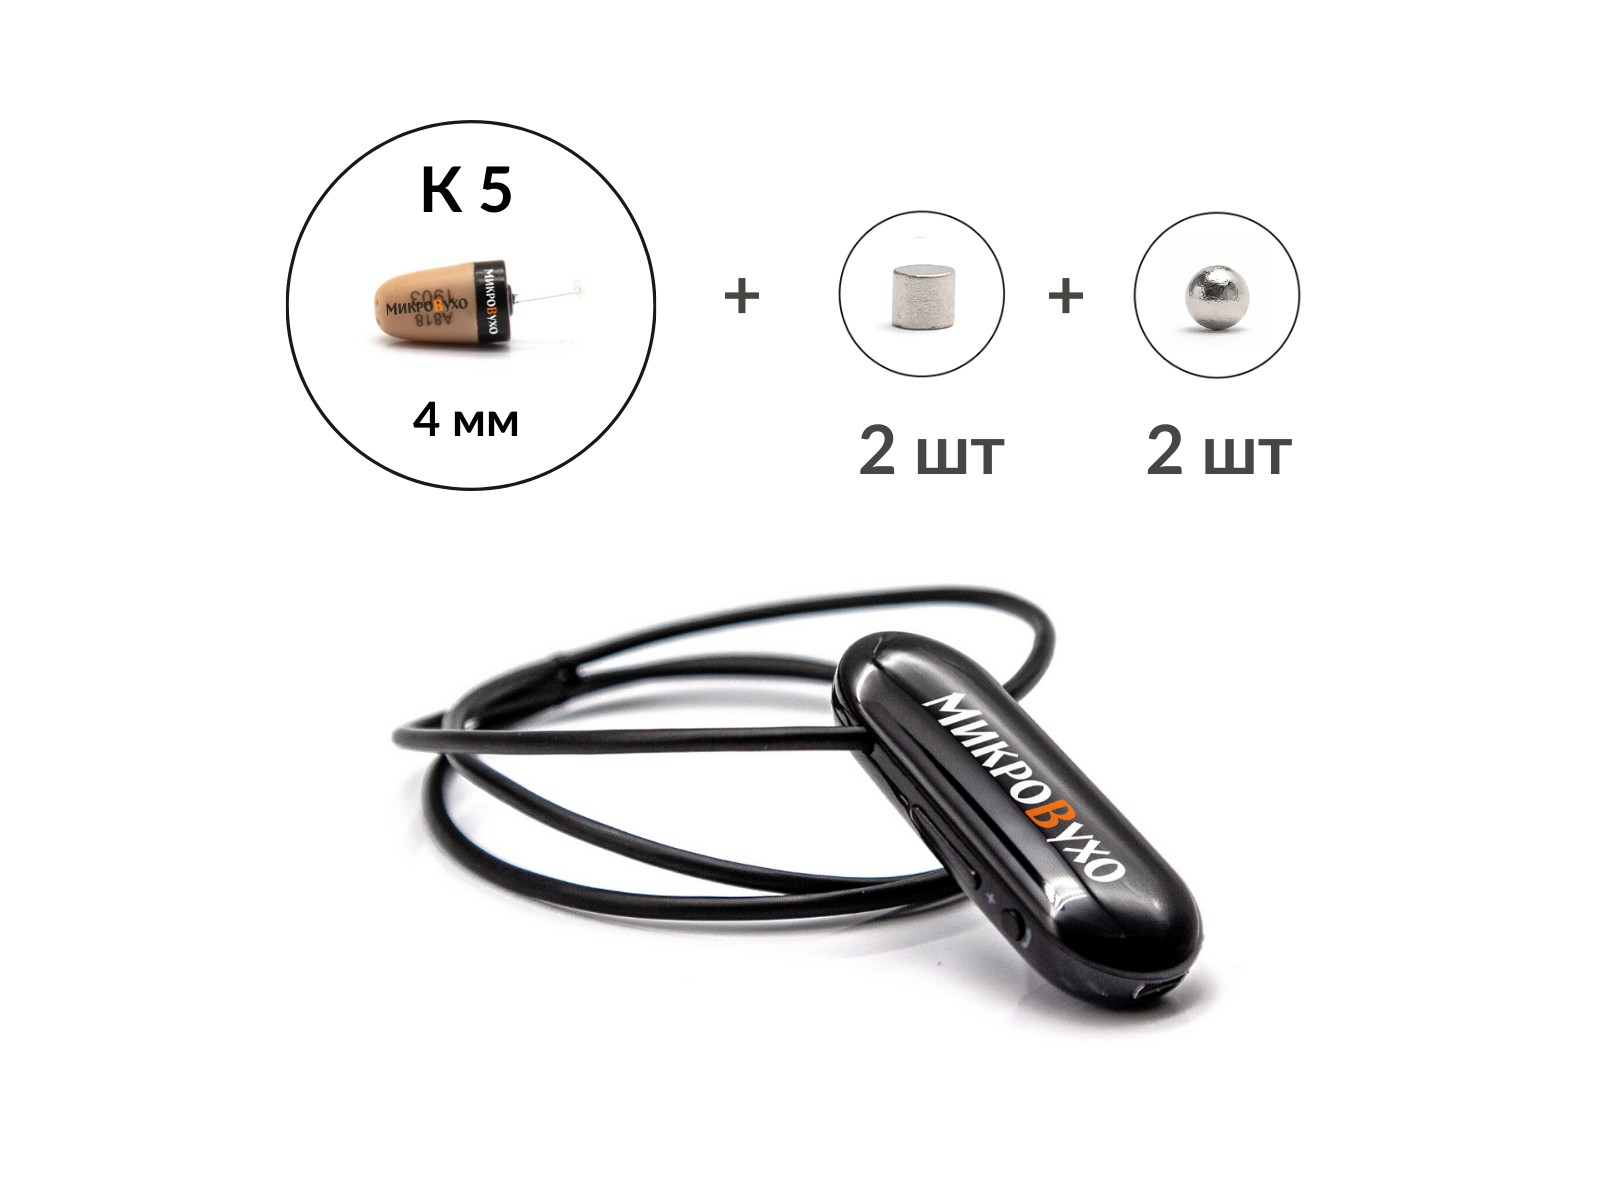 Аренда микронаушника Bluetooth Basic с капсулой K5 4 мм и магнитами 2 мм